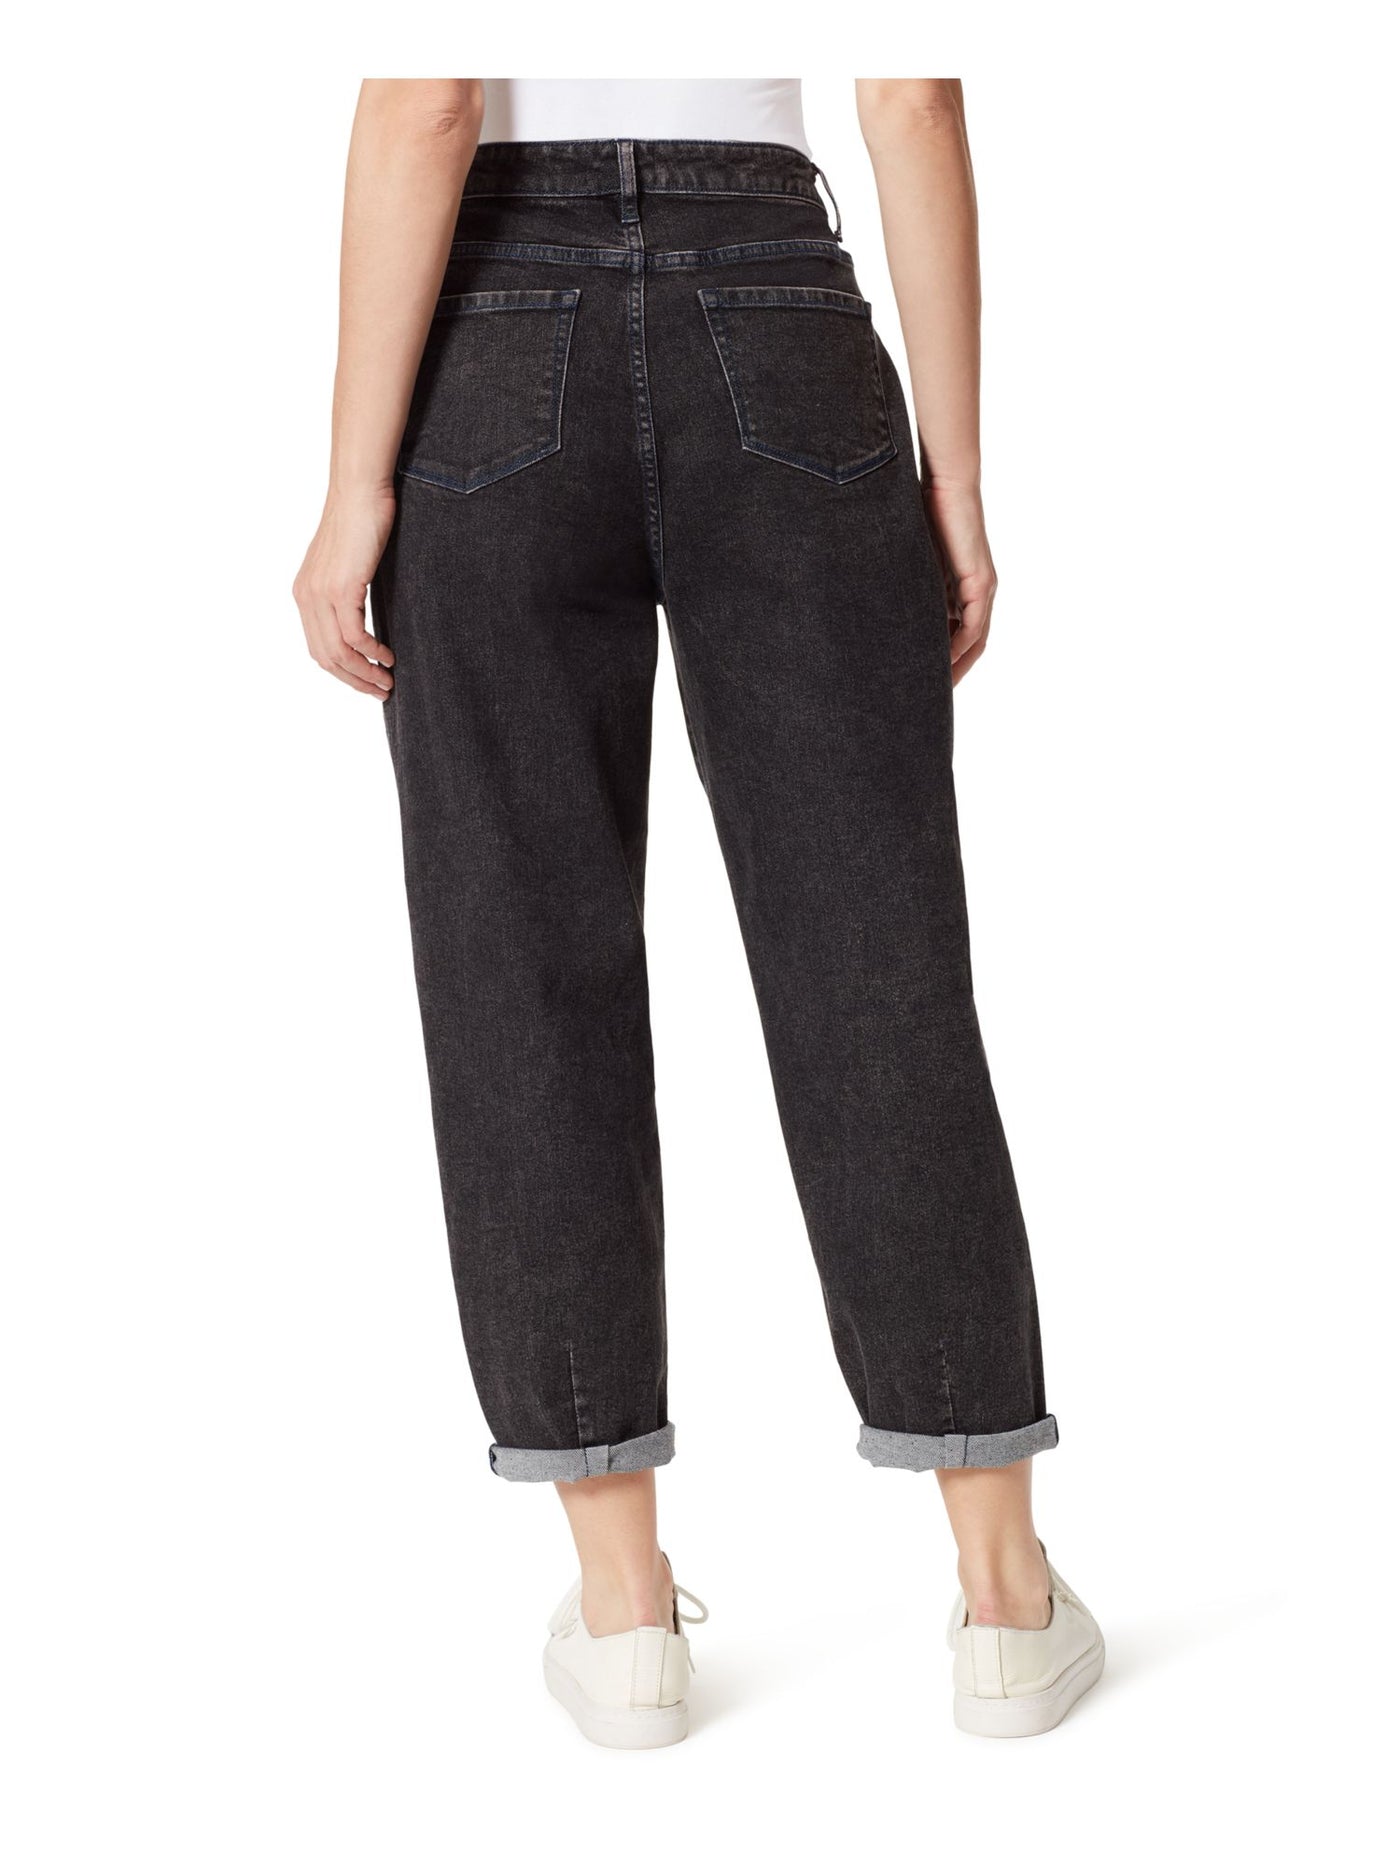 FRAYED JEANS Womens Black Pocketed Zippered Capri Jeans 28 Waist